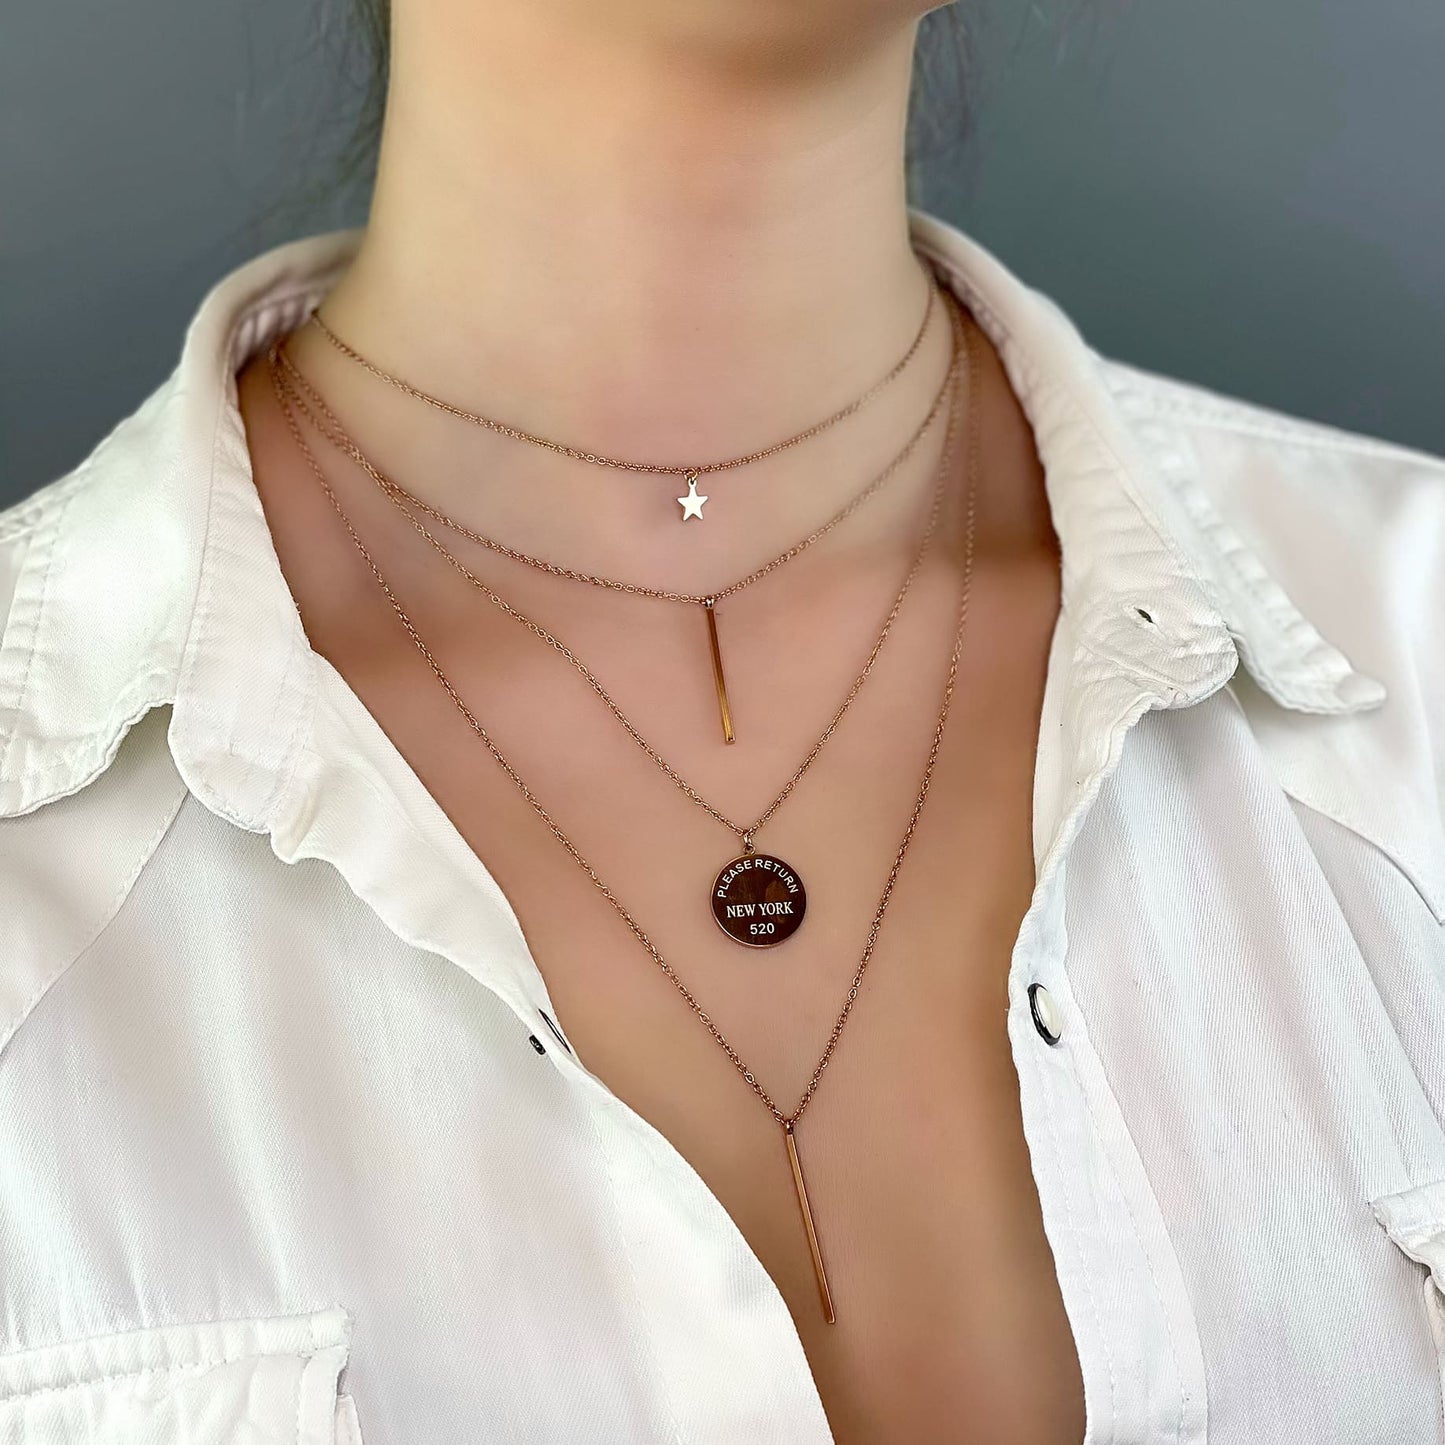 Steel chain pendant choker necklace